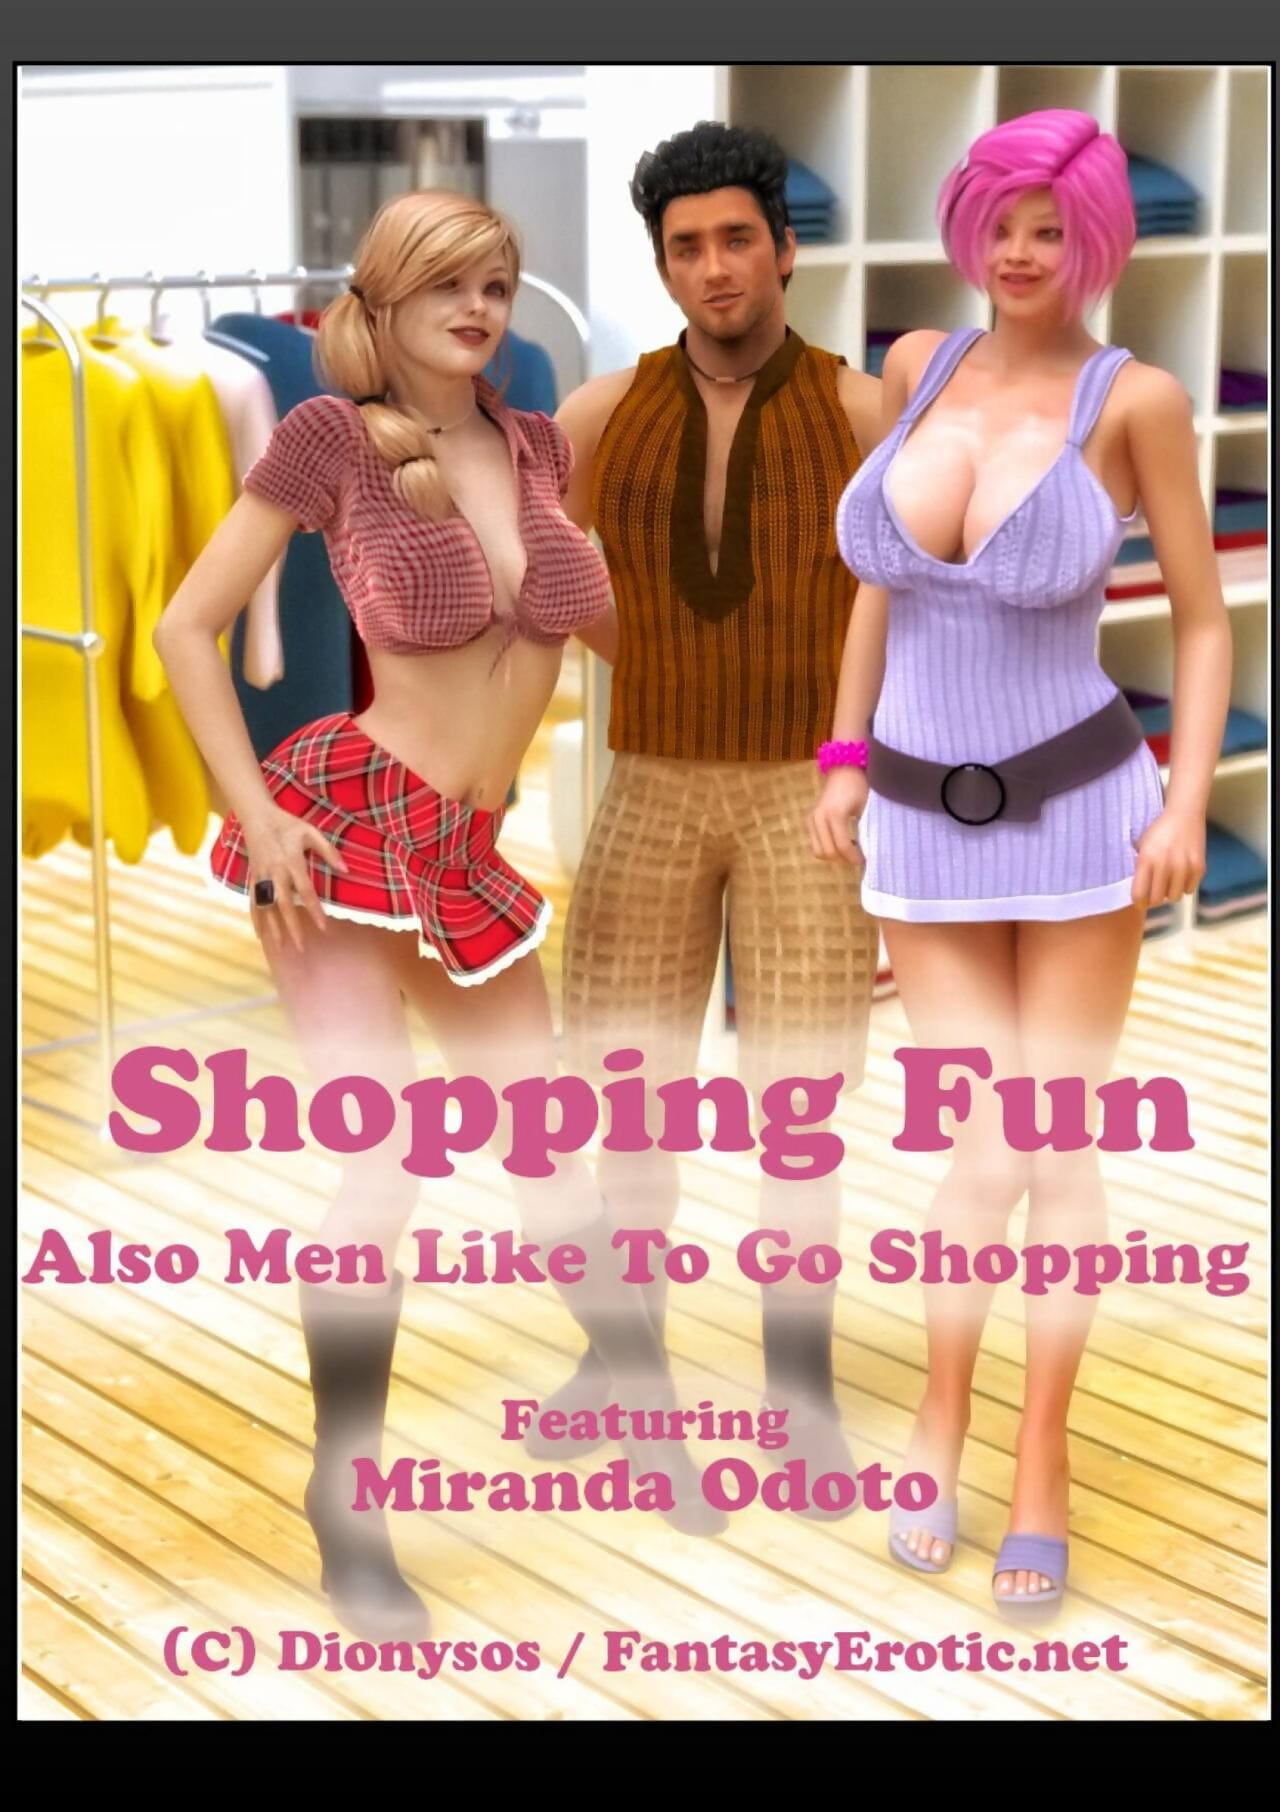 dionysos Shopping divertente page 1